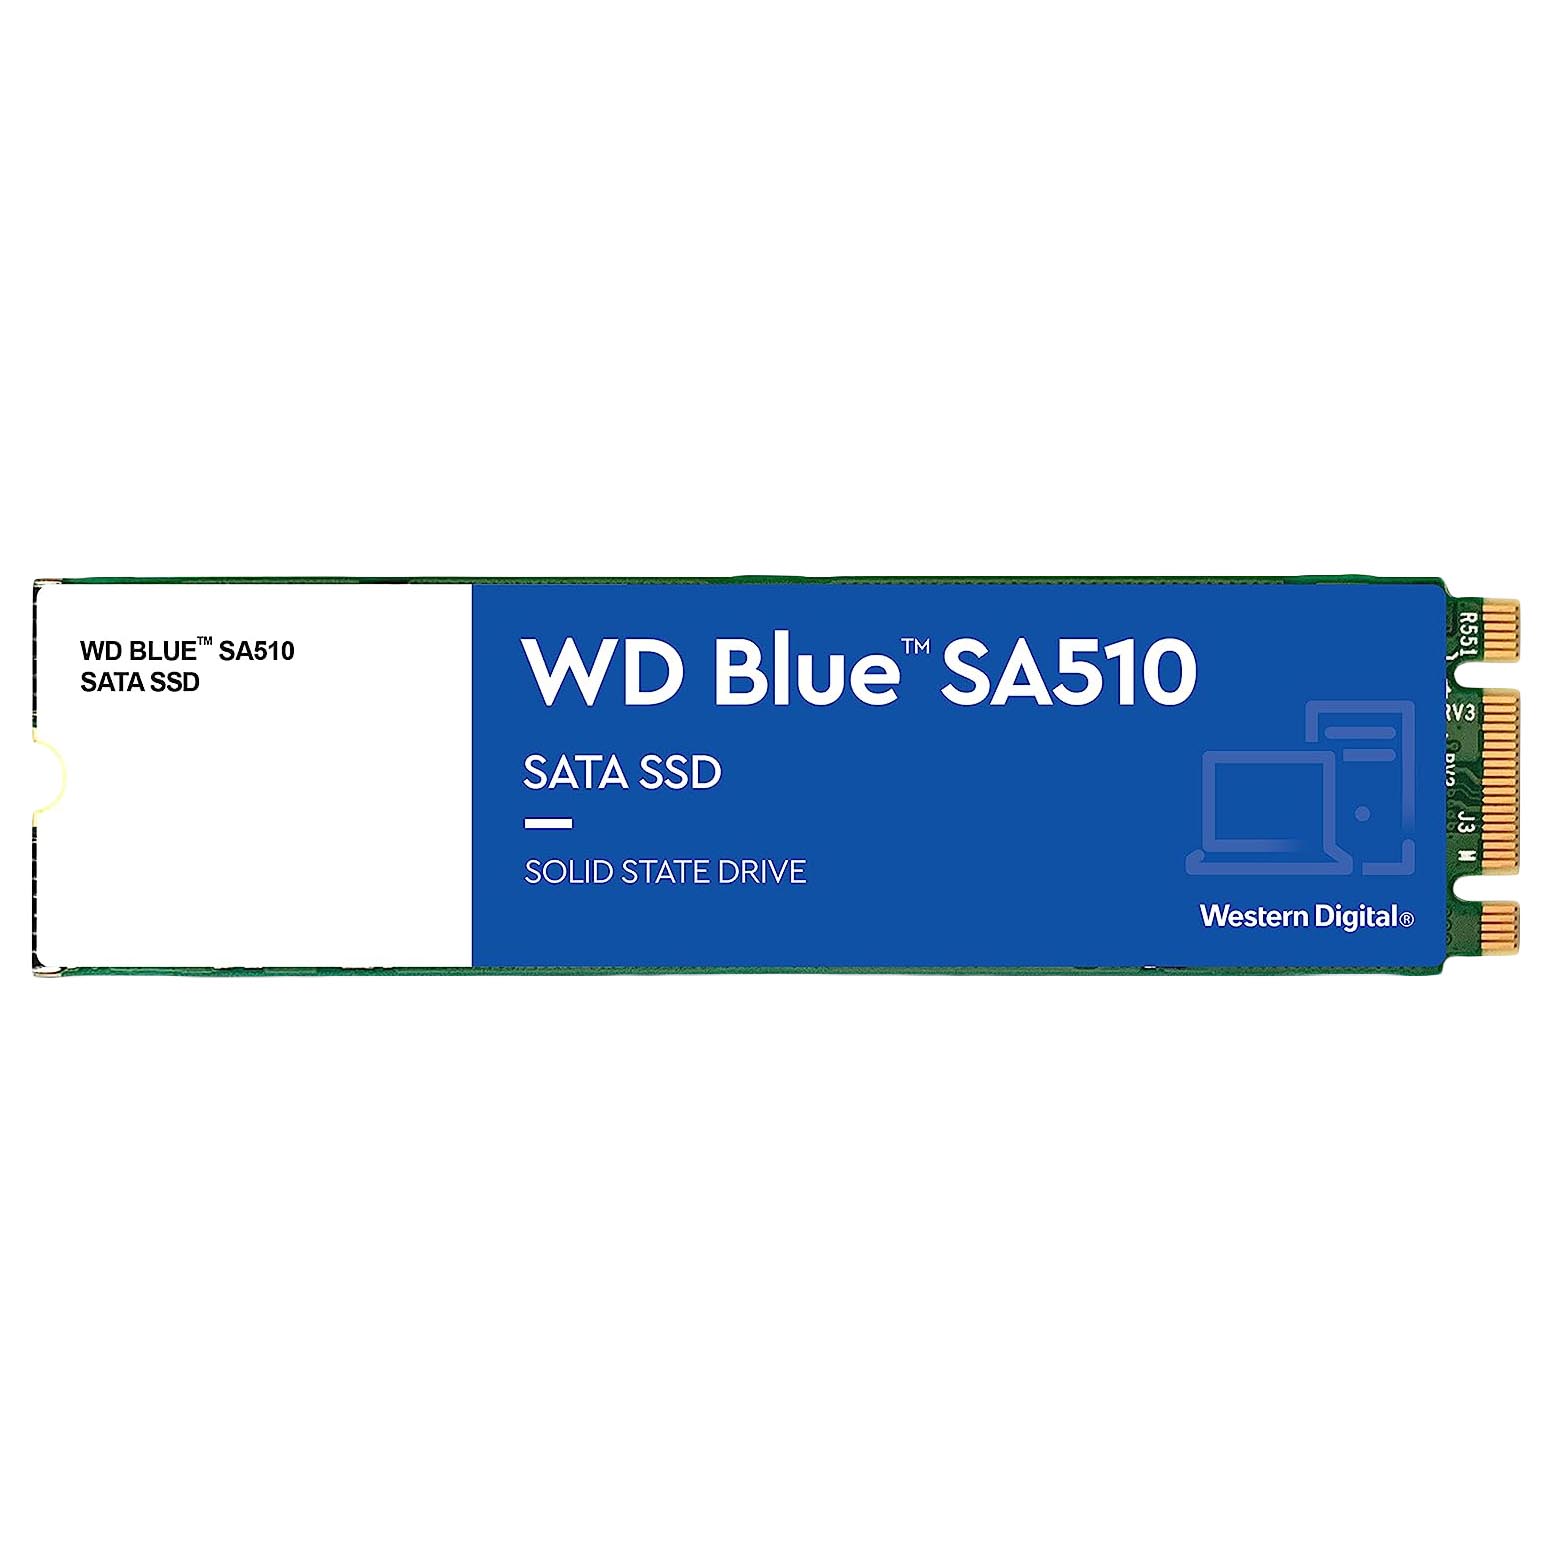 внутренний твердотельный накопитель western digital sn850 wds500g1x0e 00afy0 500гб м 2 2280 Внутренний твердотельный накопитель Western Digital WD Blue SA510, WDS500G3B0B, 500Гб, M.2 2280